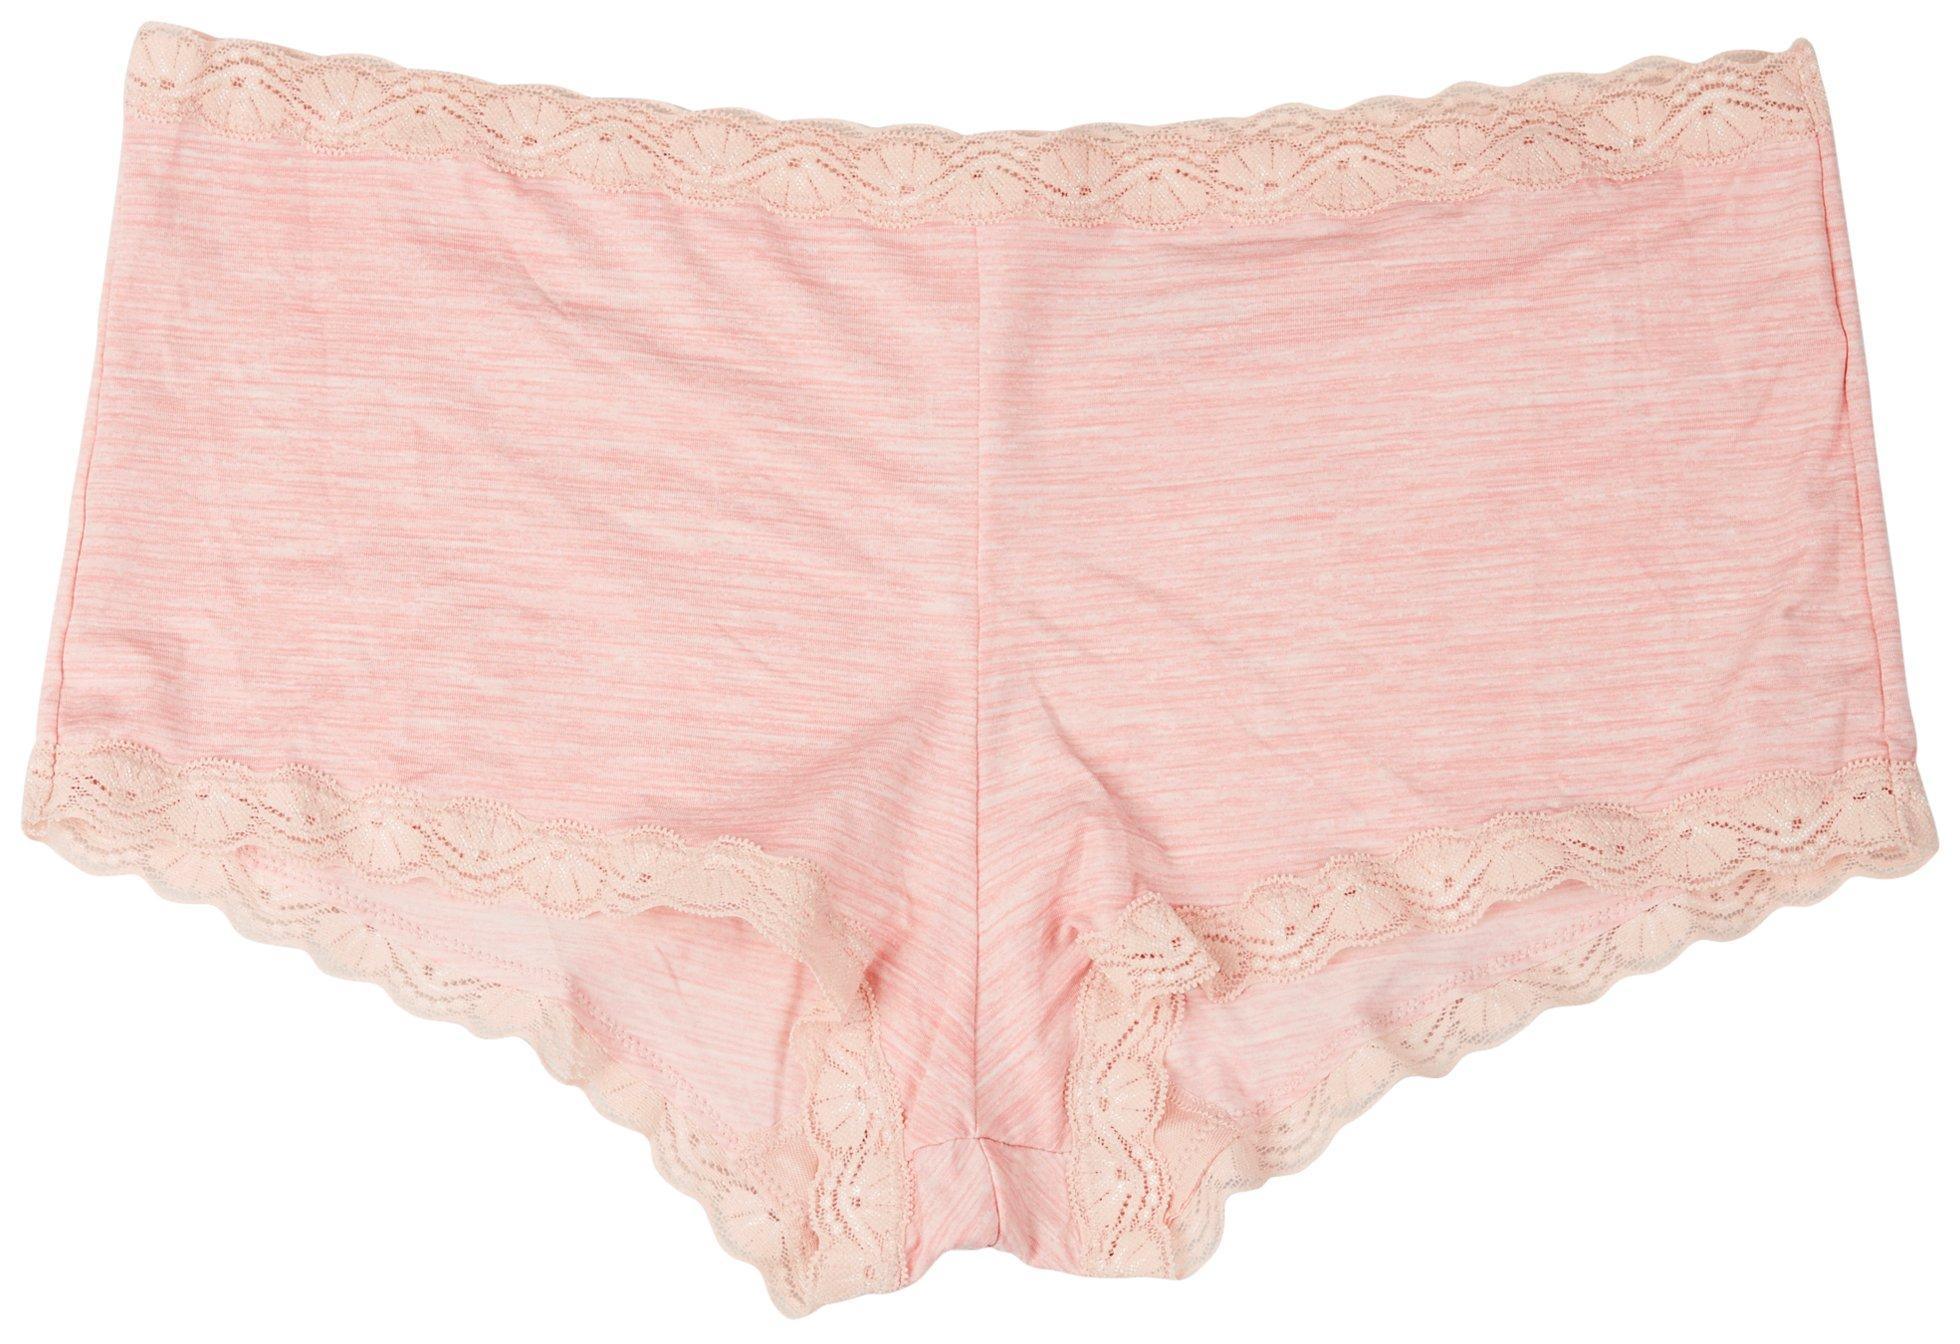 Hanes 6-pk. Ultimate Breathable Cotton Bikini Panties